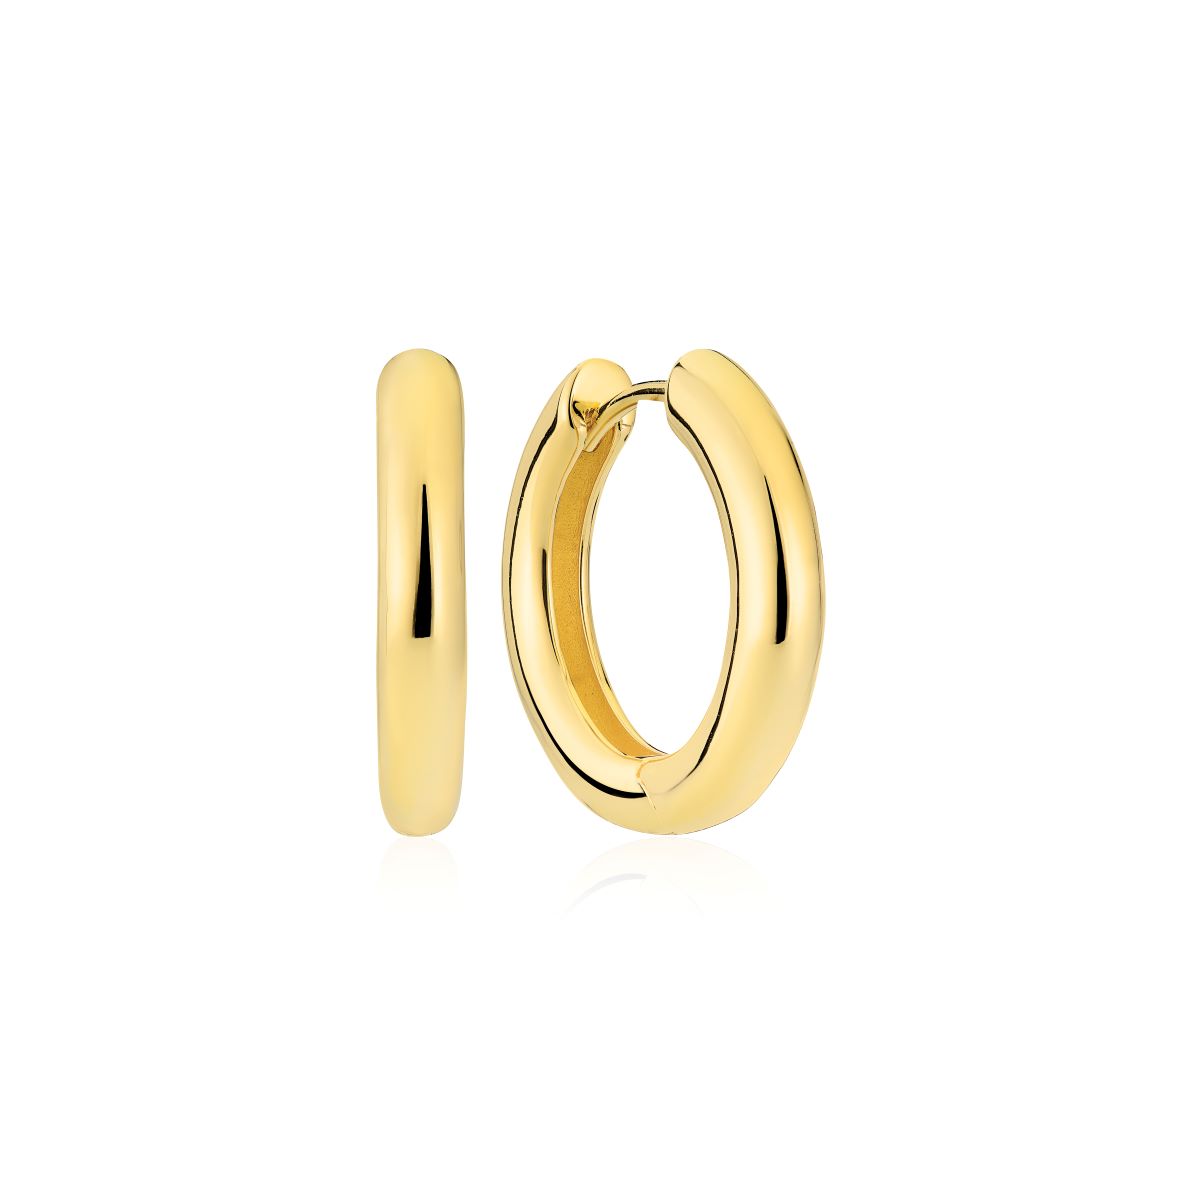 Sif Jakobs Carrara Pianura Medio Earrings -18K Gold Plated - SJ-E2471-YG